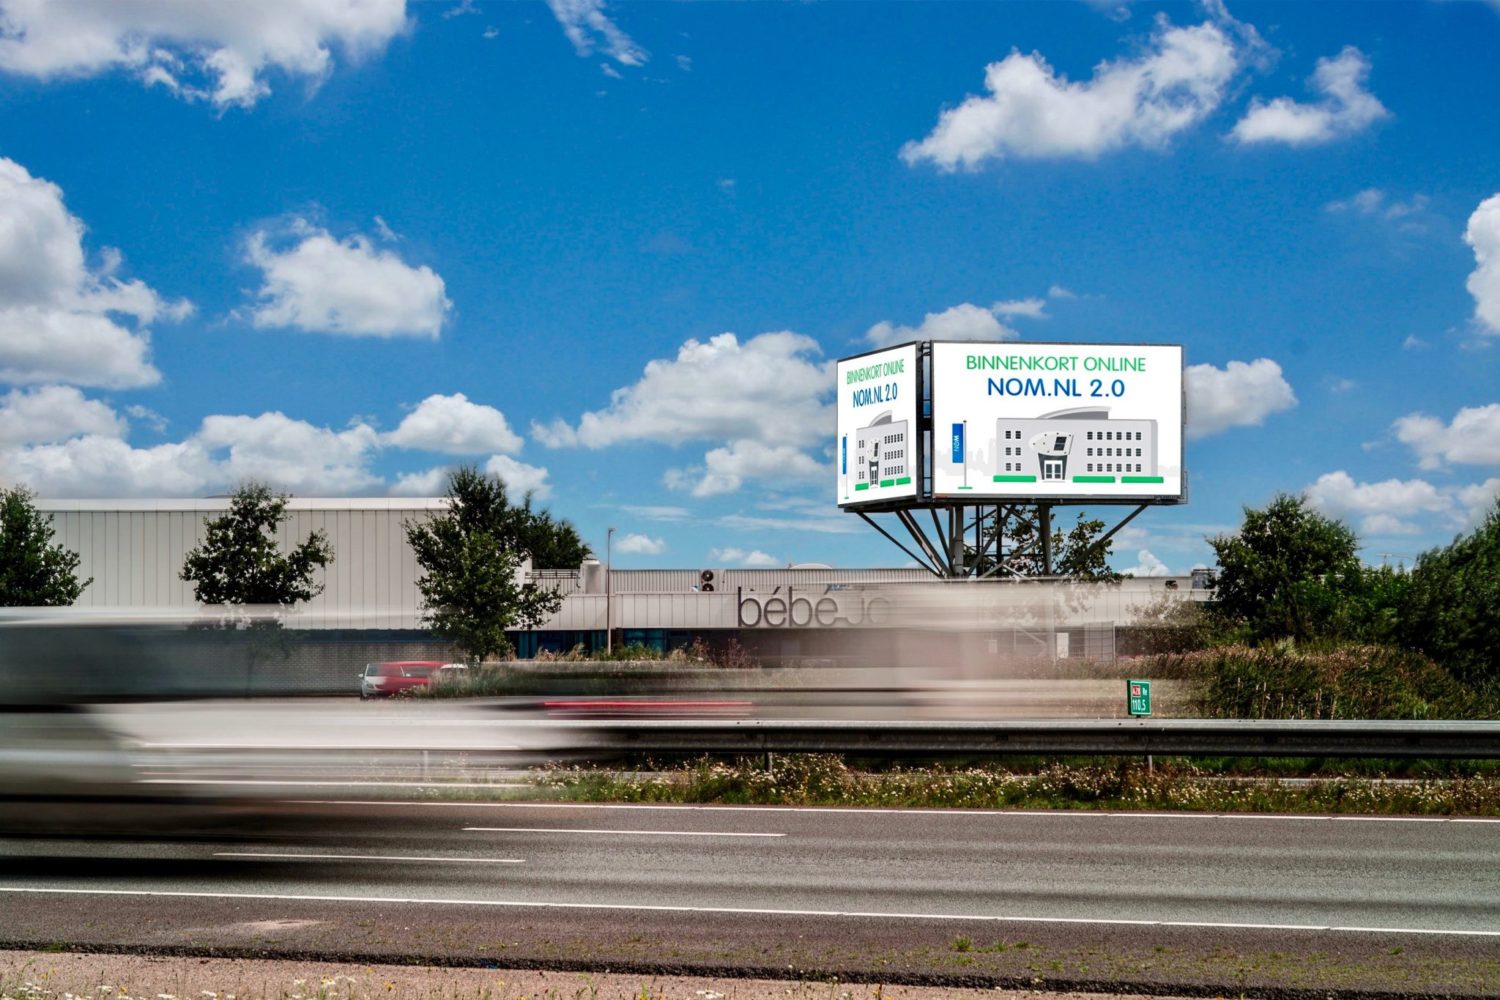 Mundu treats motoring Netherlands to relevant advertising